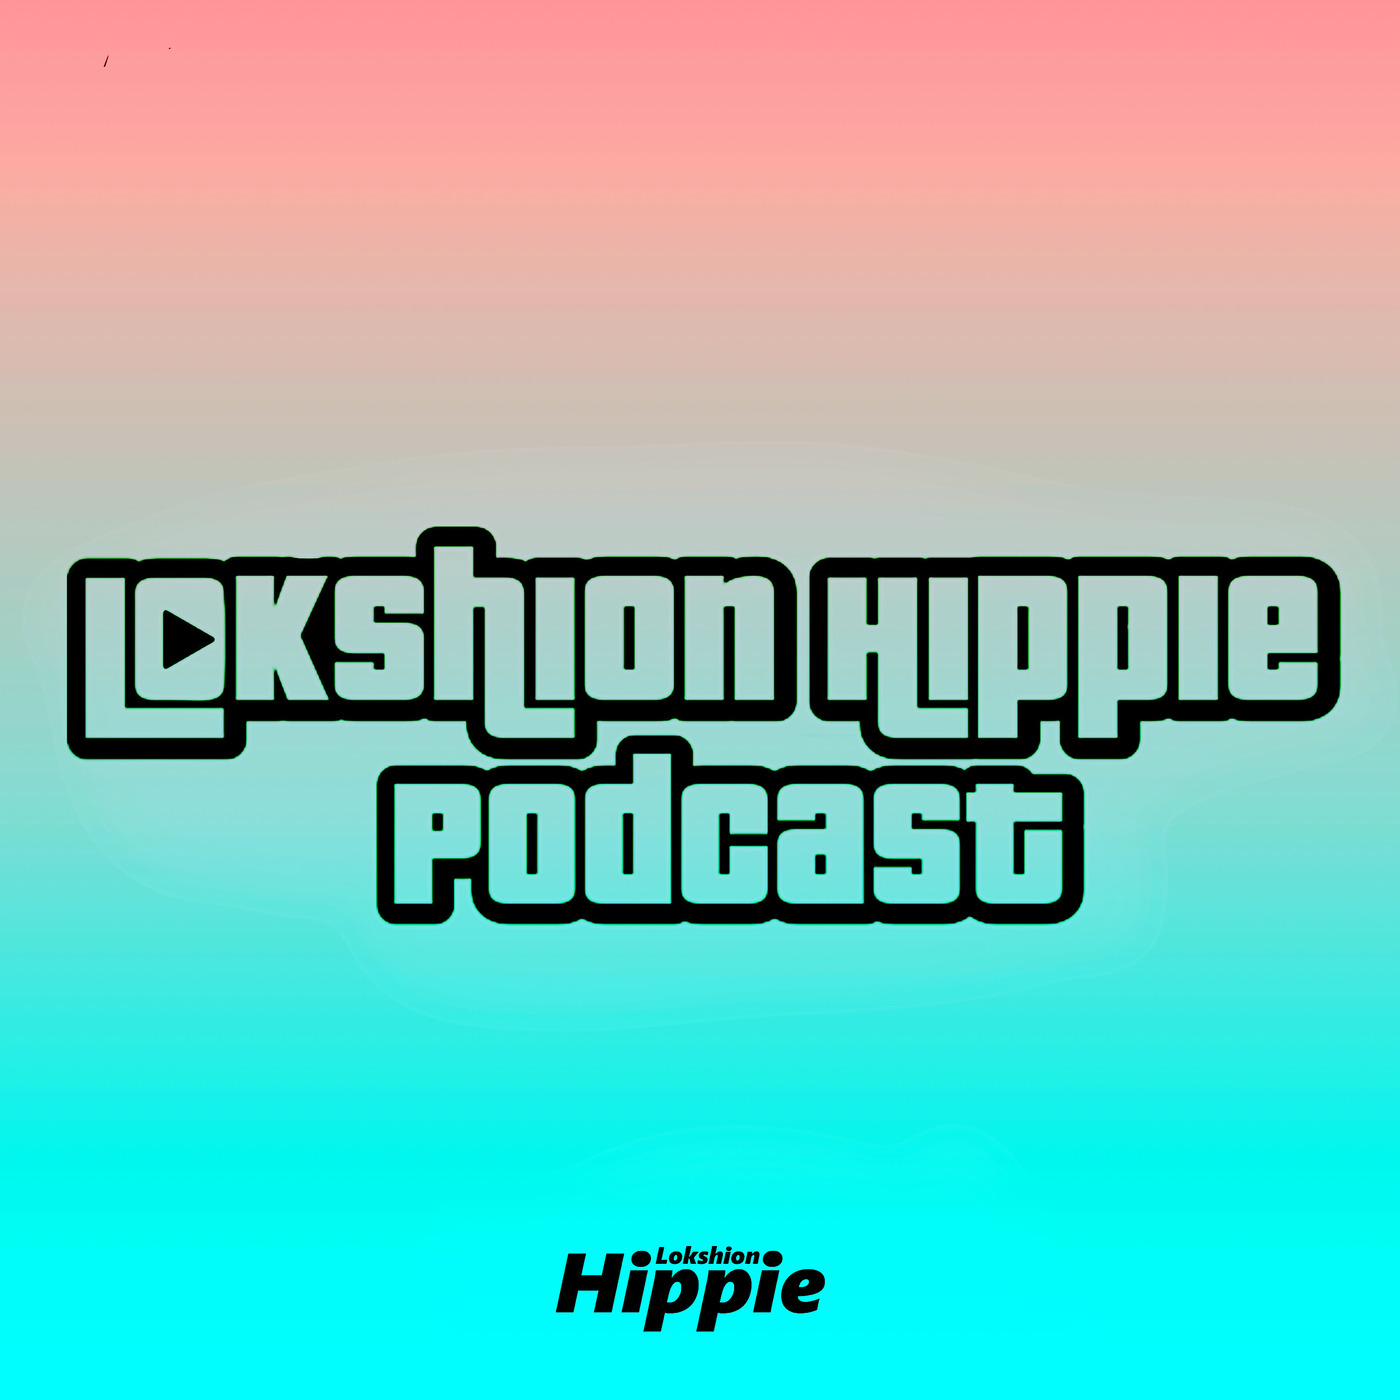 Lokshion Hippie Podcast